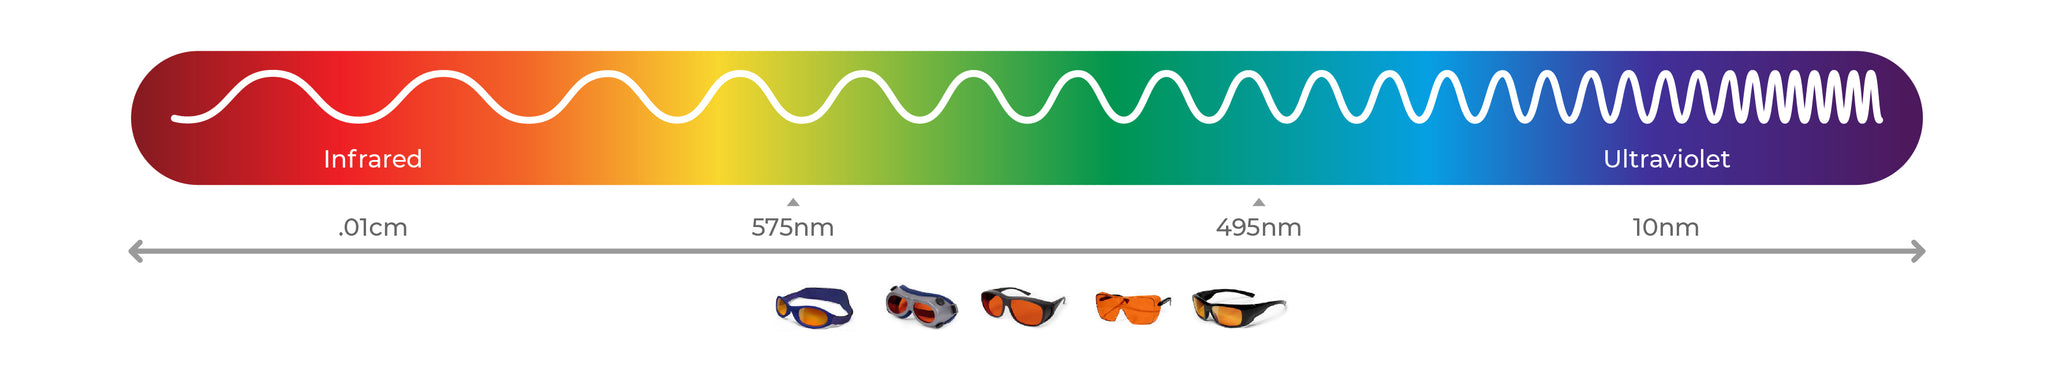 Green Laser Safety Glasses Spectrum